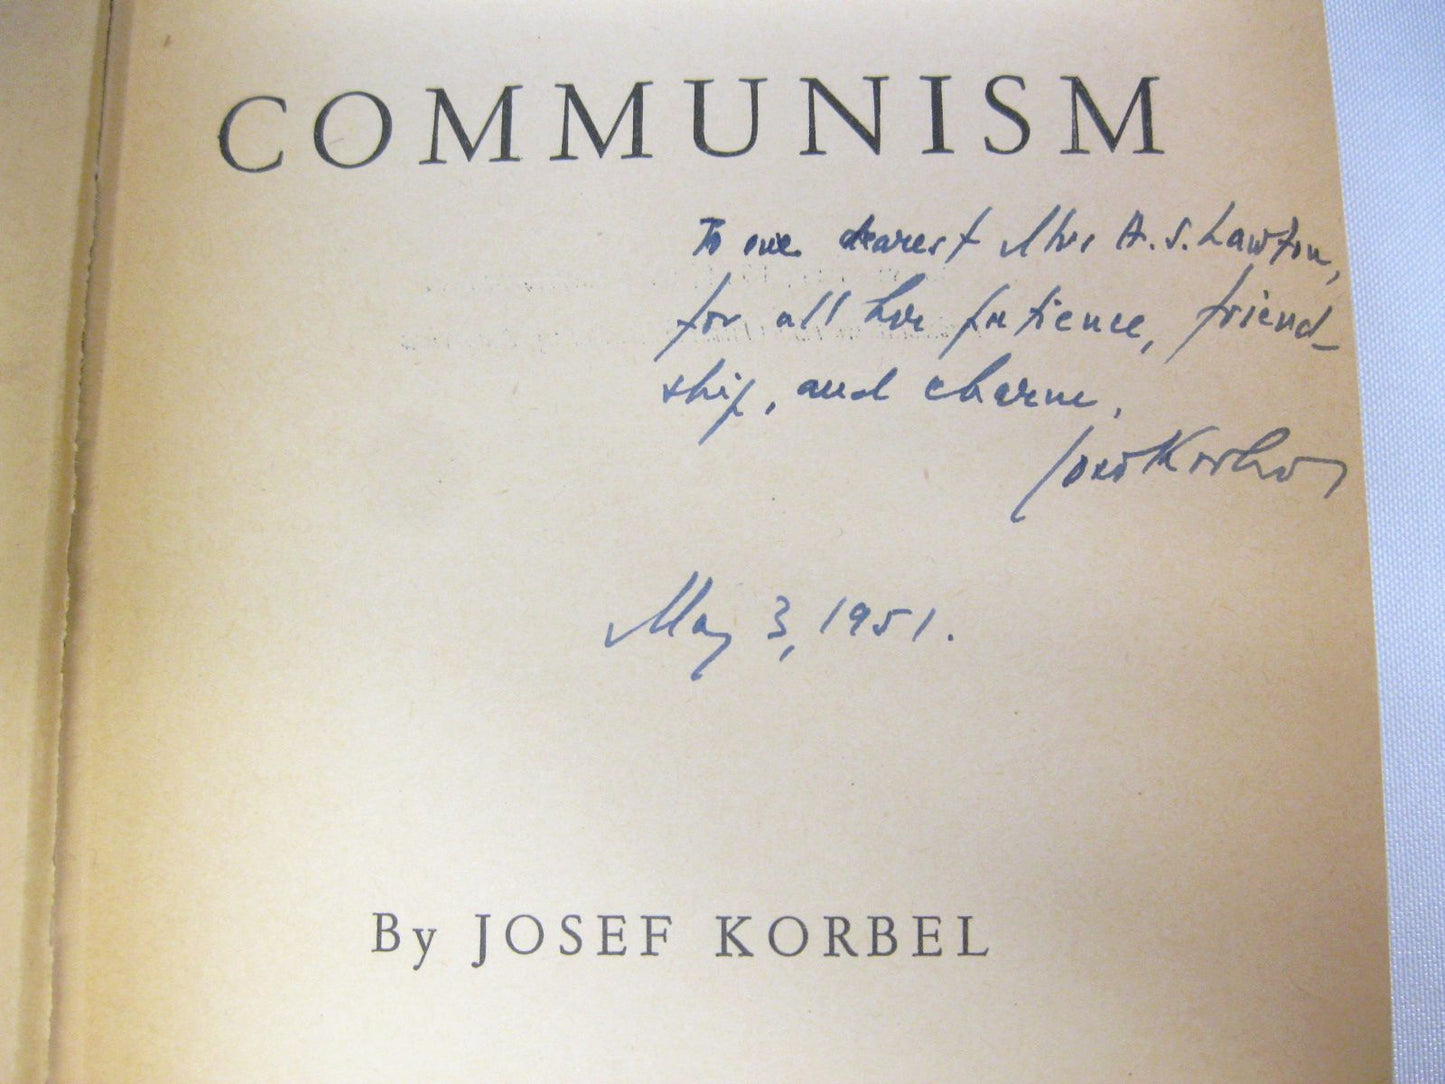 Tito's Communism by Josef Korbel